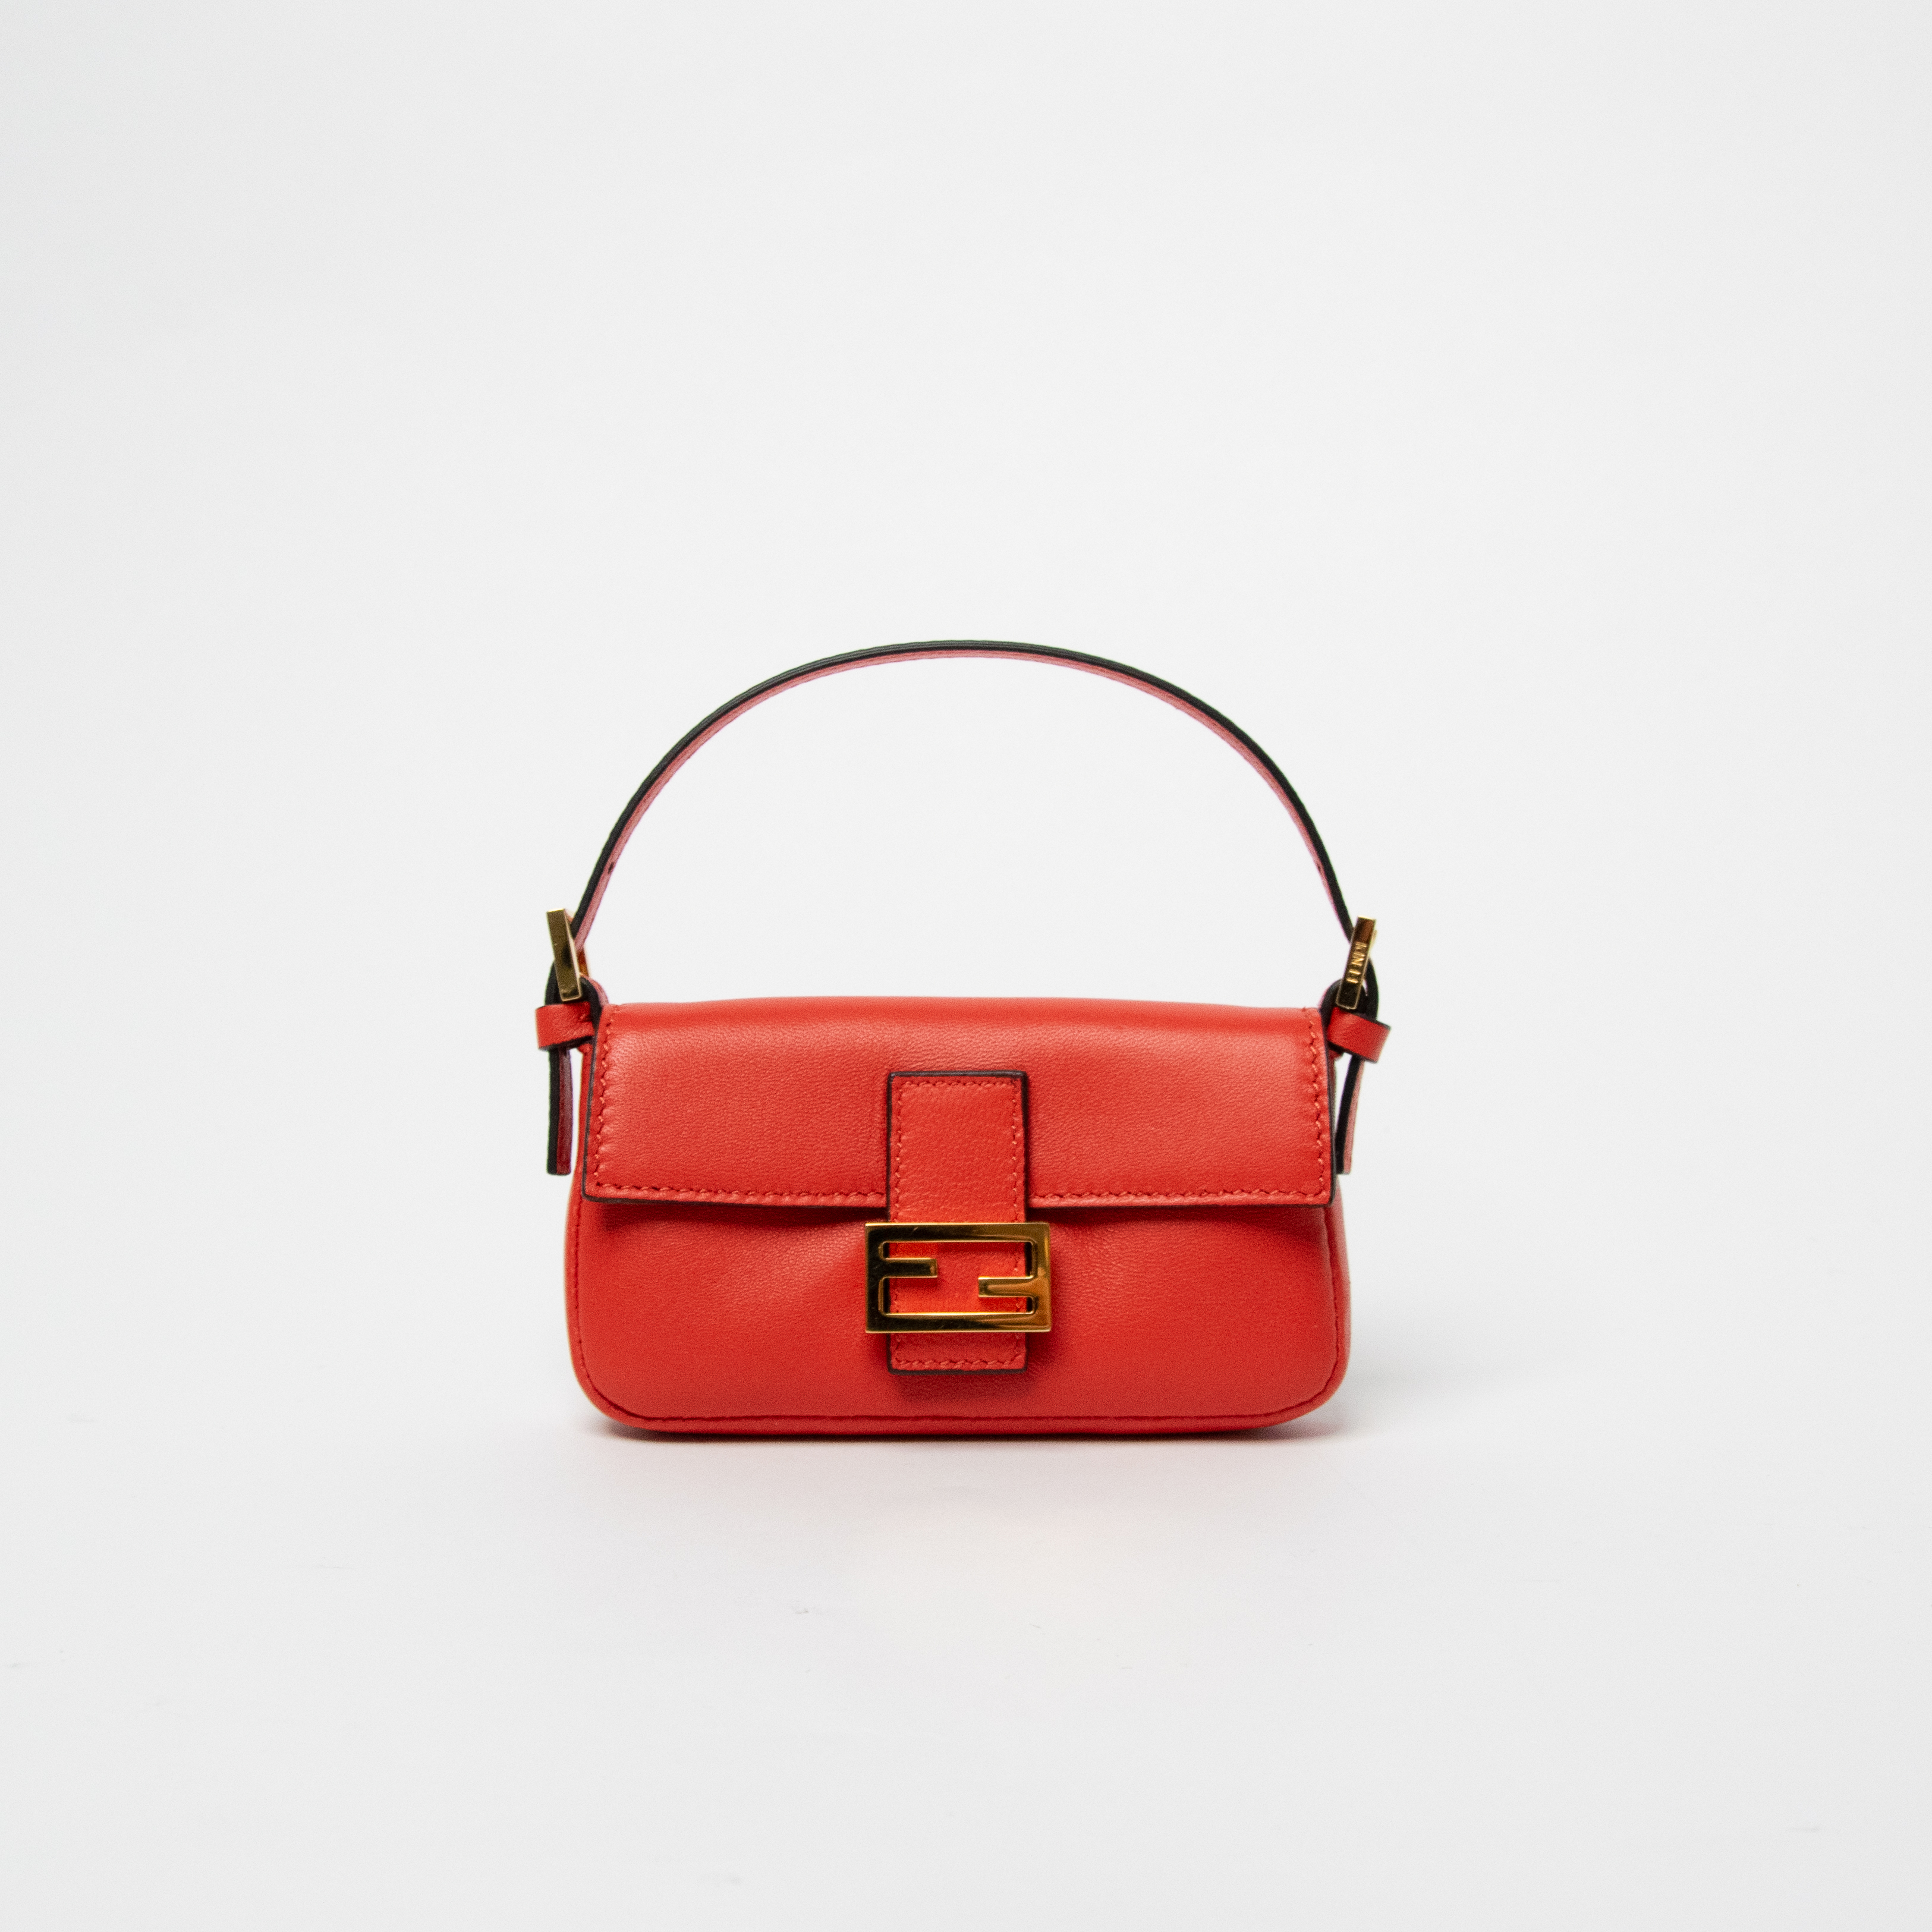 Fendi Nano Baguette bag in red leather